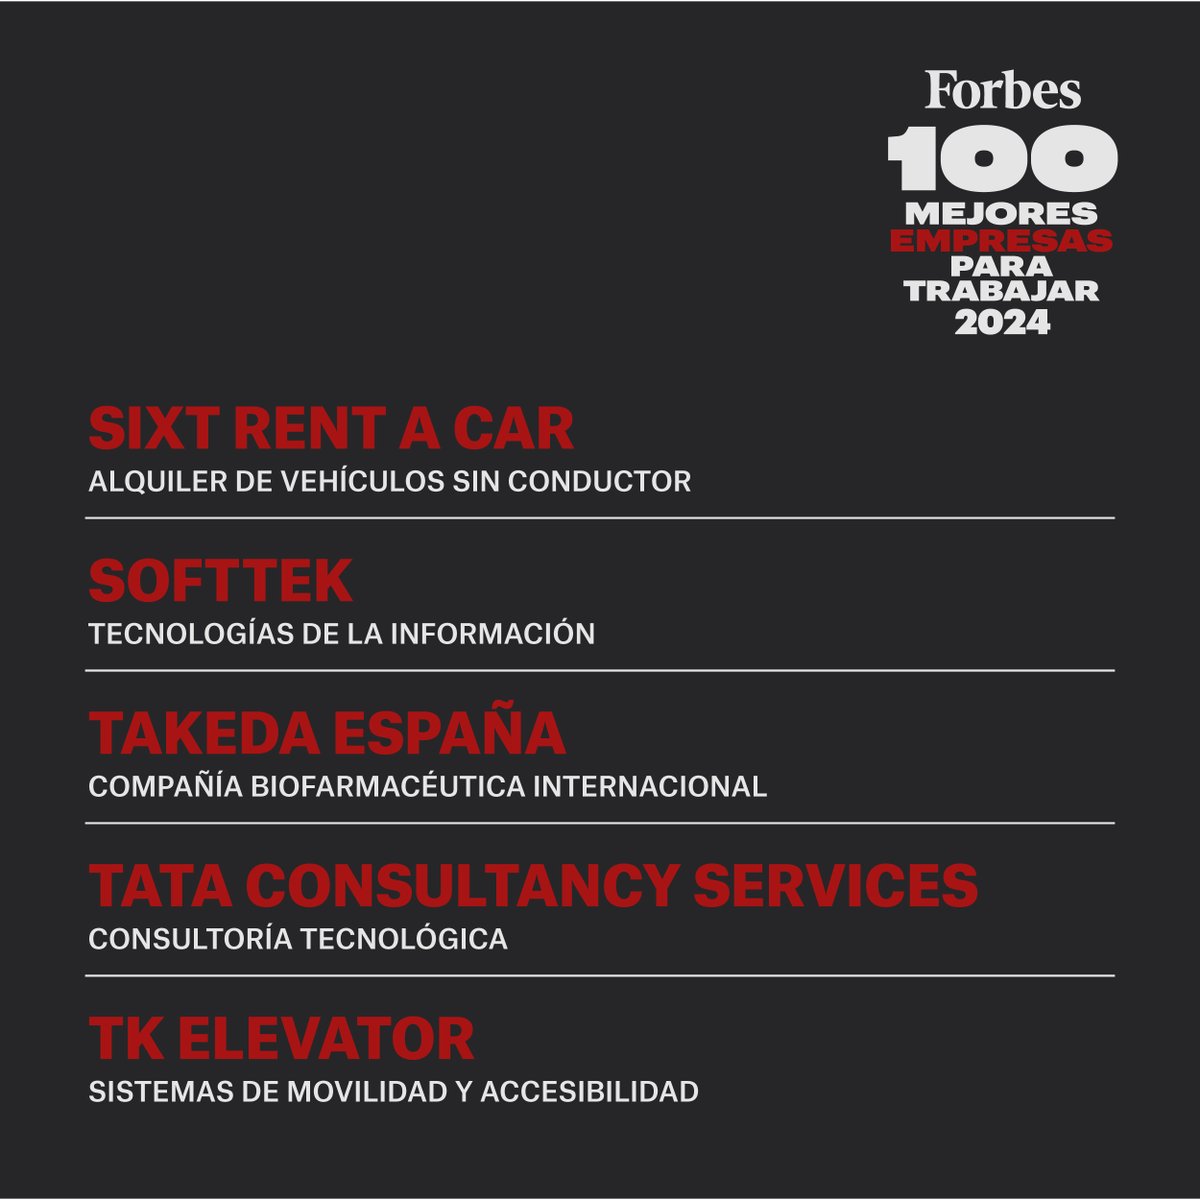 #ForbesMejoresEmpresas24 de Forbes y @ForbesWomen_es 
💼 Sixt Rent a Car - @sixtespana
💼 Softtek - @Softtek
💼 Takeda España - @Takeda_ES
💼 Tata Consultancy Services - @TCS
💼 TK Elevator- @TKE_ES
forbes.es/listas/467710/…